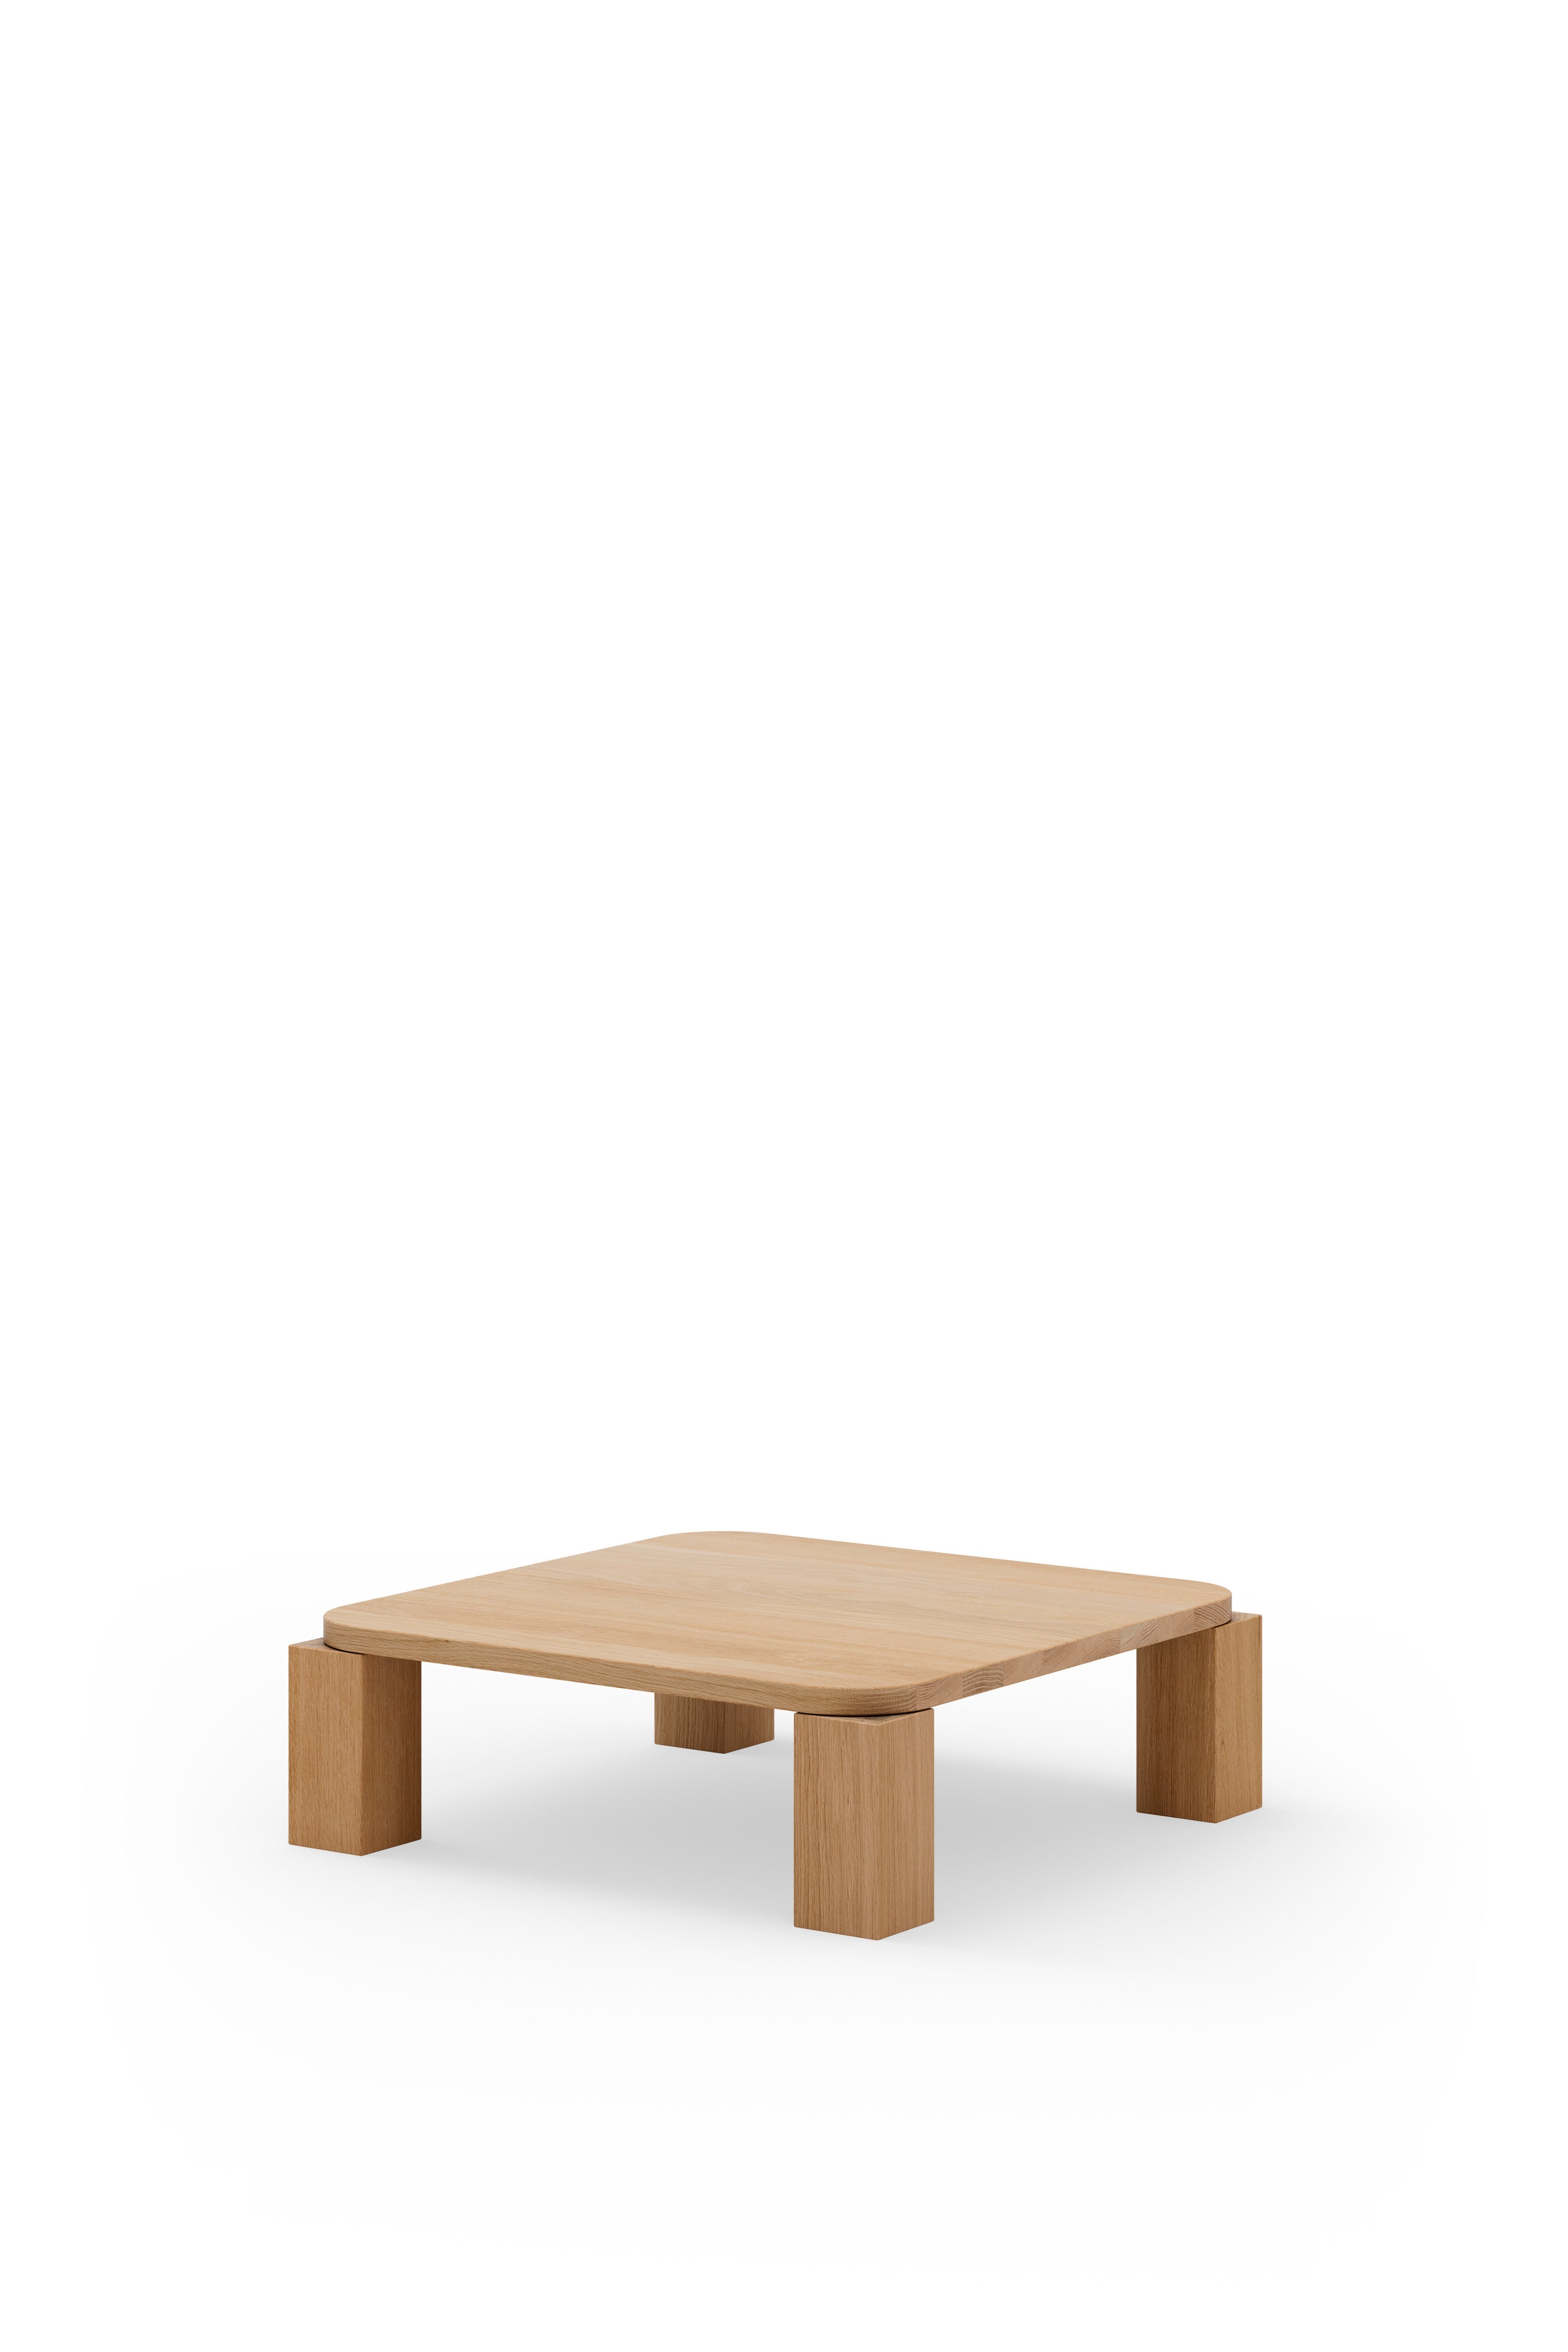 New Works Table basse Atlas chêne naturel, 82x82 cm